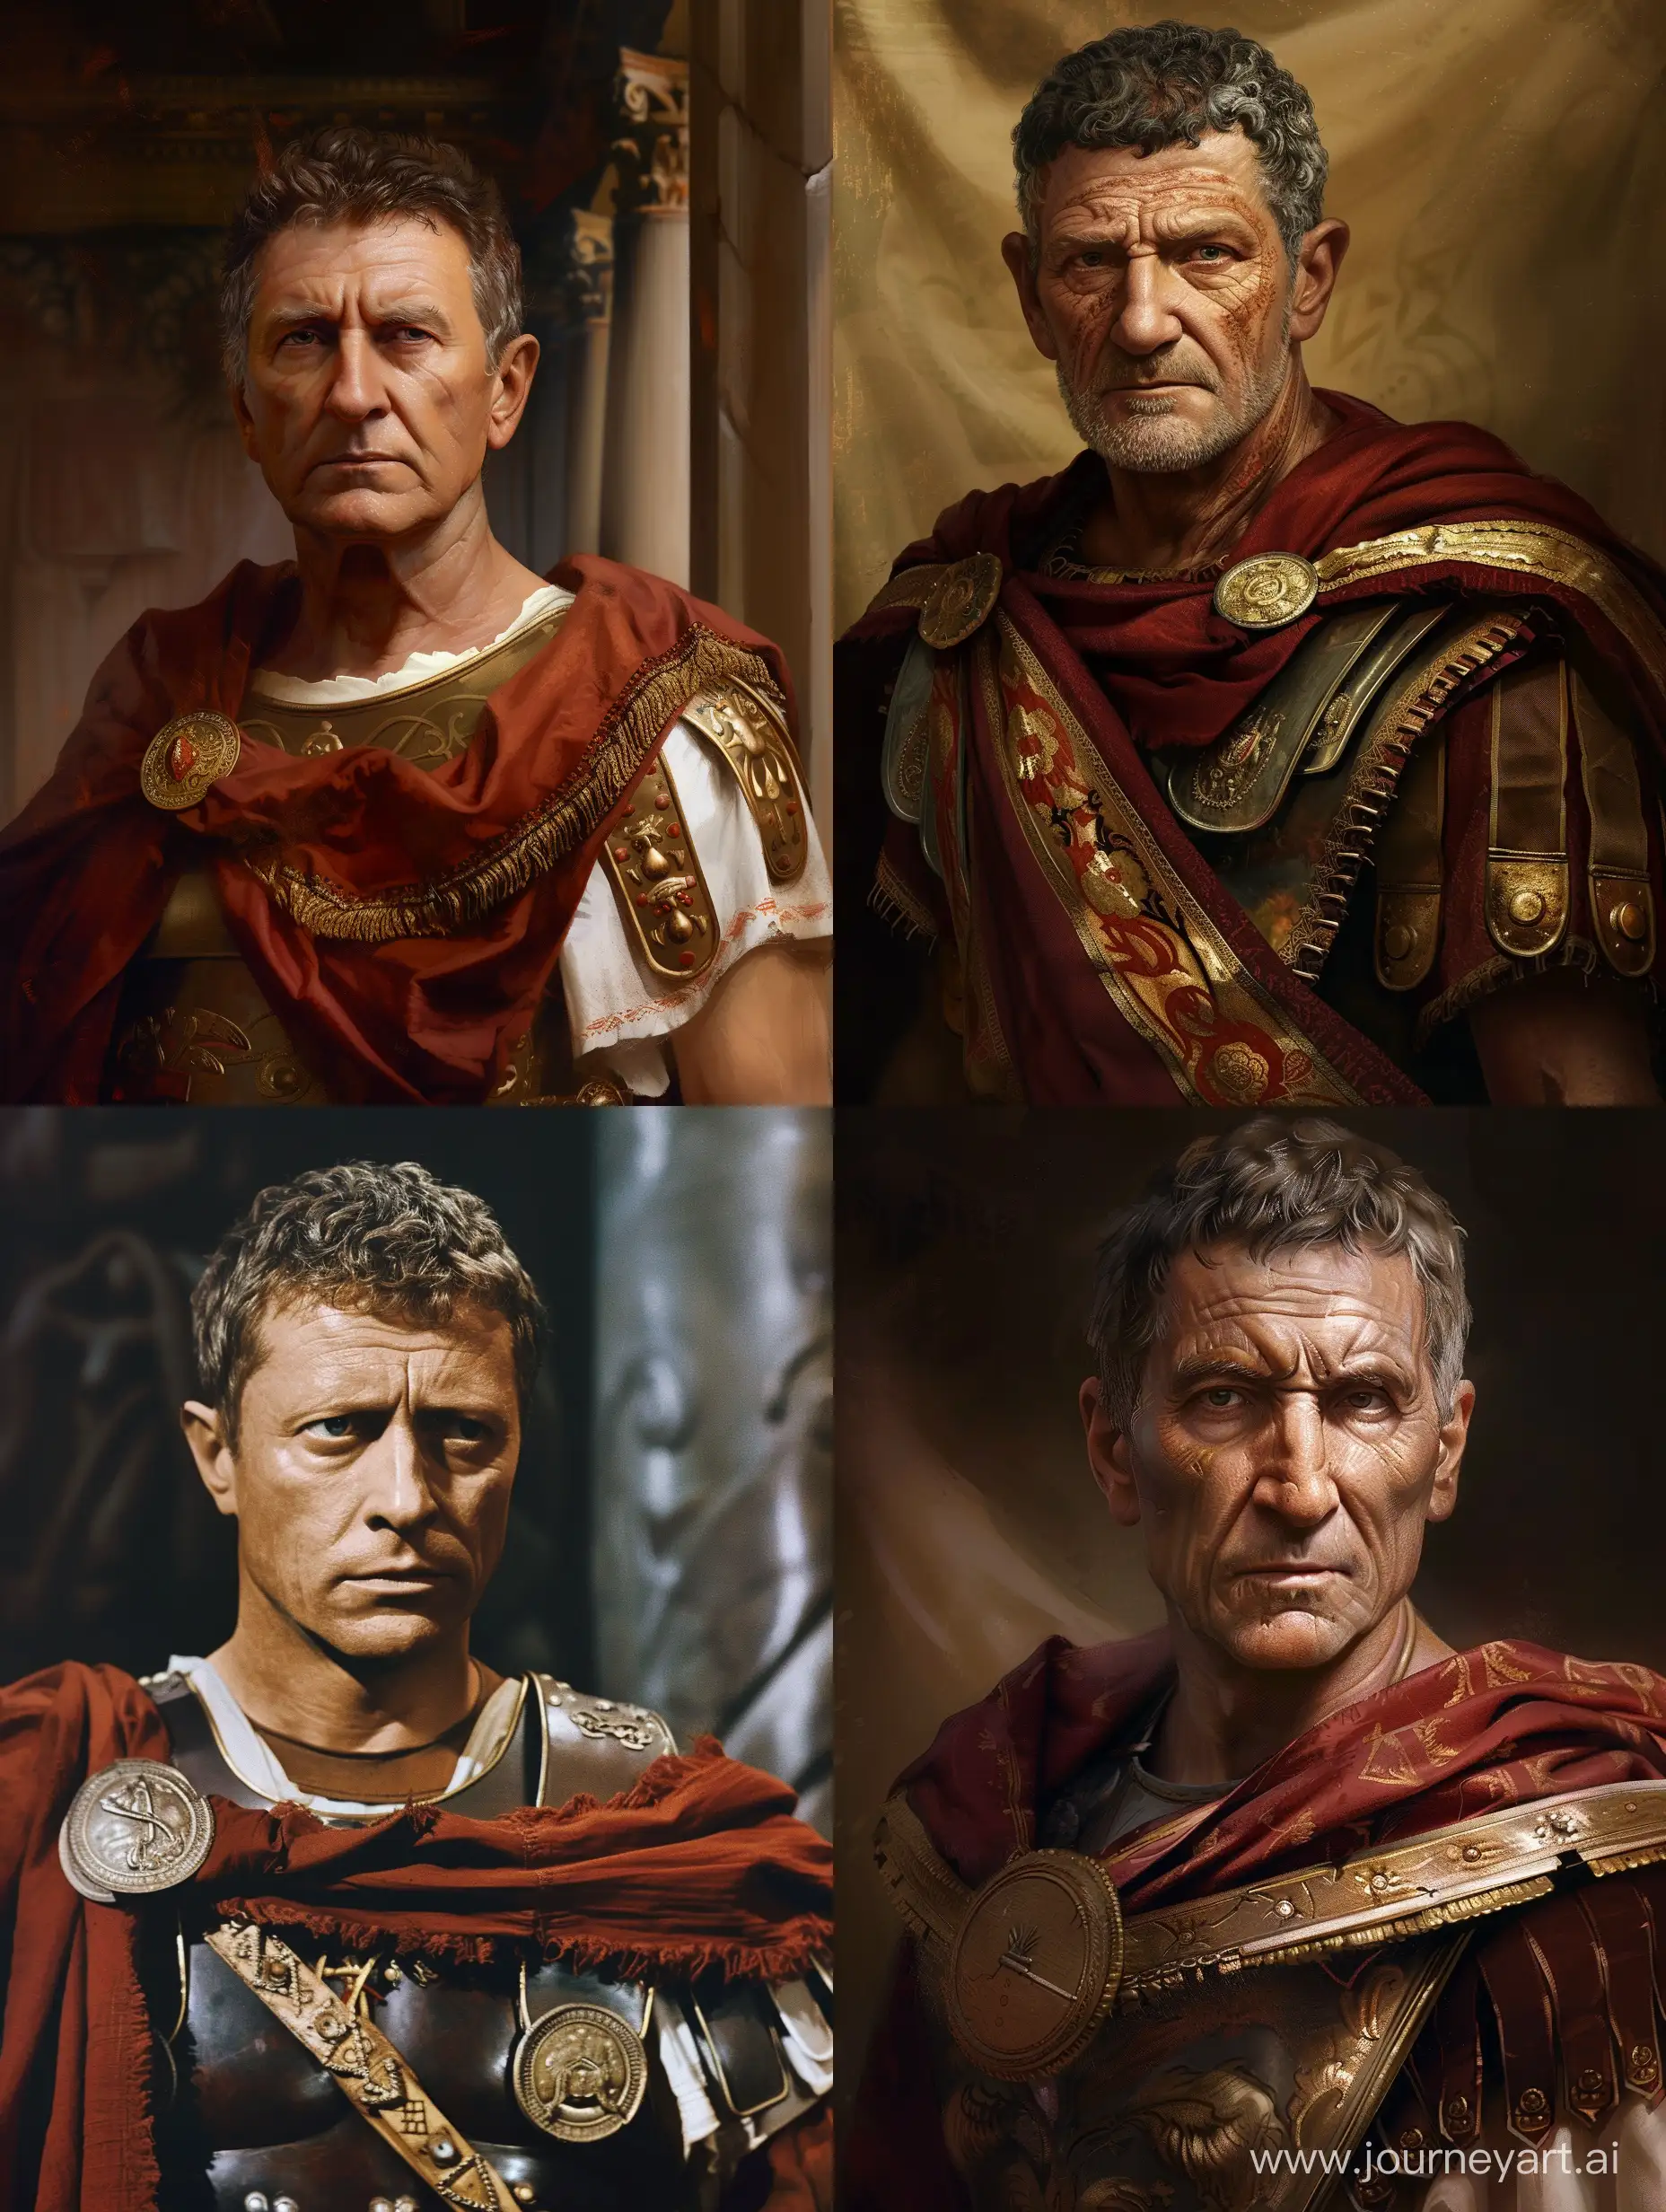 Emperor-Claudius-of-Rome-a-Brutal-Ruler-in-Realistic-Portrait